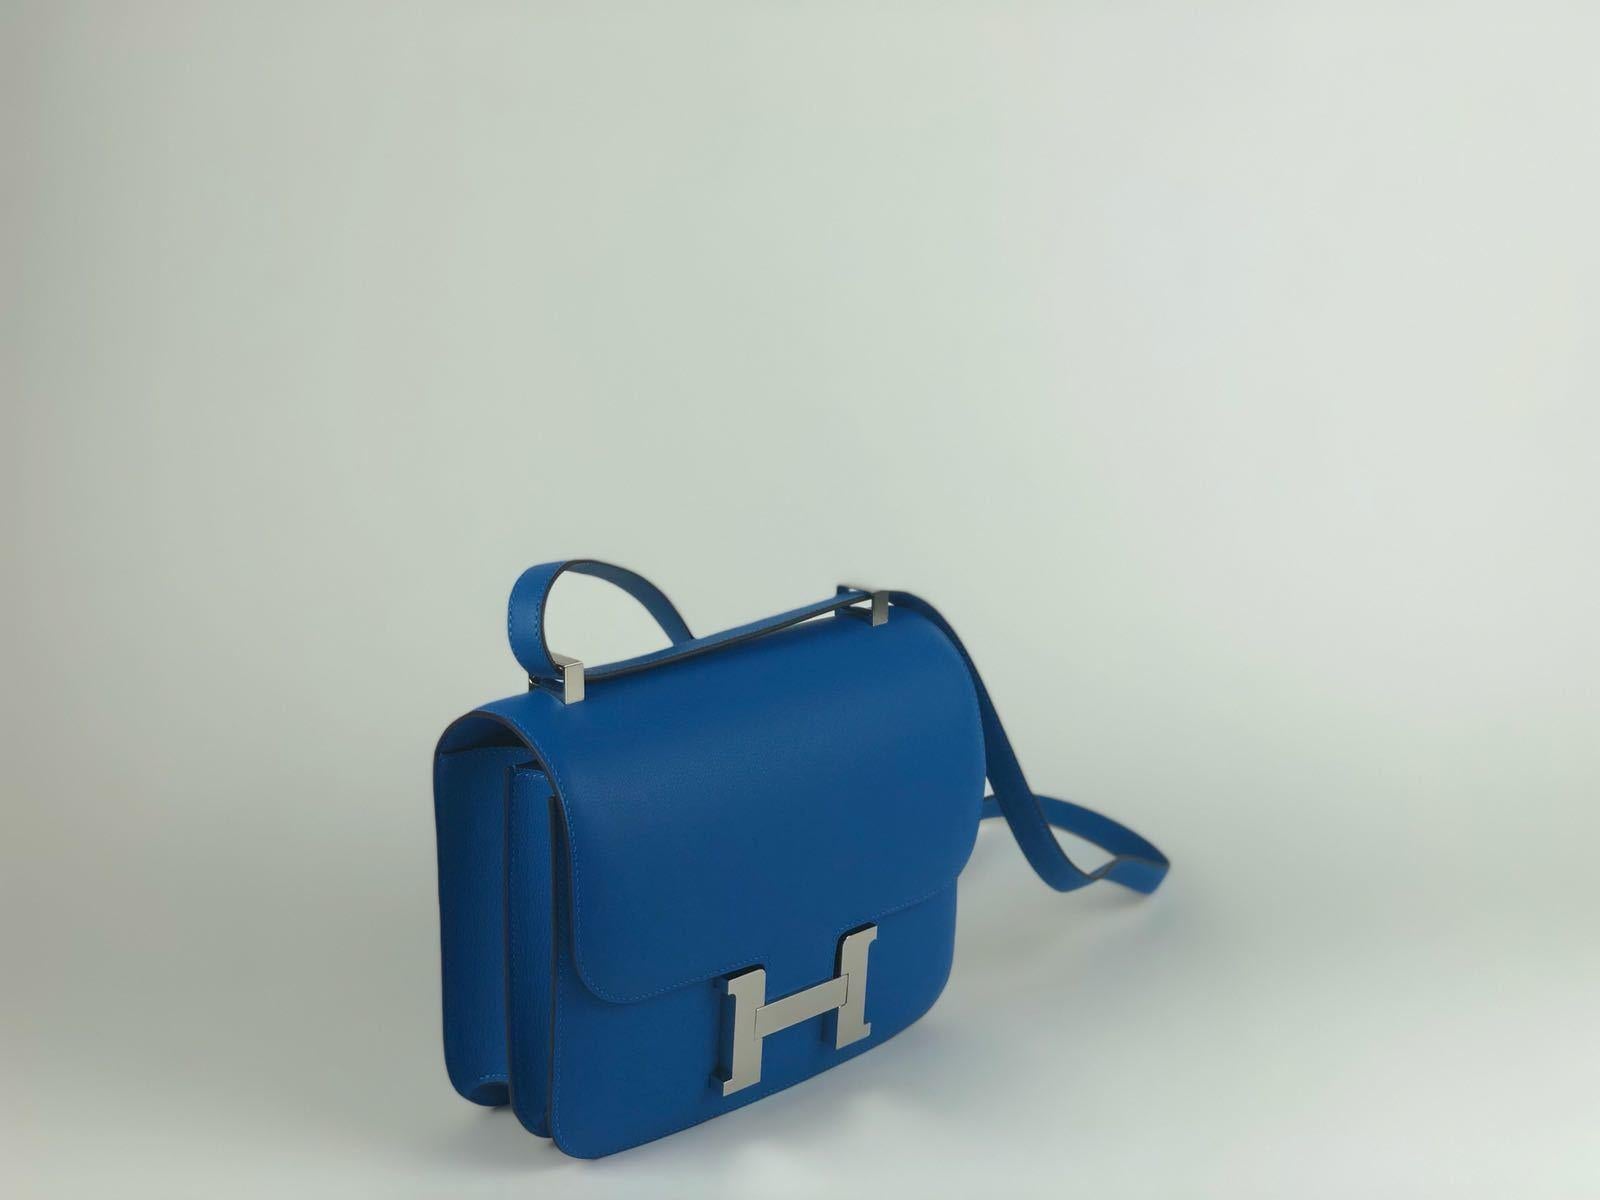 New never worn Hermes Bag
Constance
Size 24
Leather Evercolor
Color Blue Hydra
Palladium hardware

Comes full set: 
Original box
Invoice
Raincoat
Padlock & Keys
Dustbag